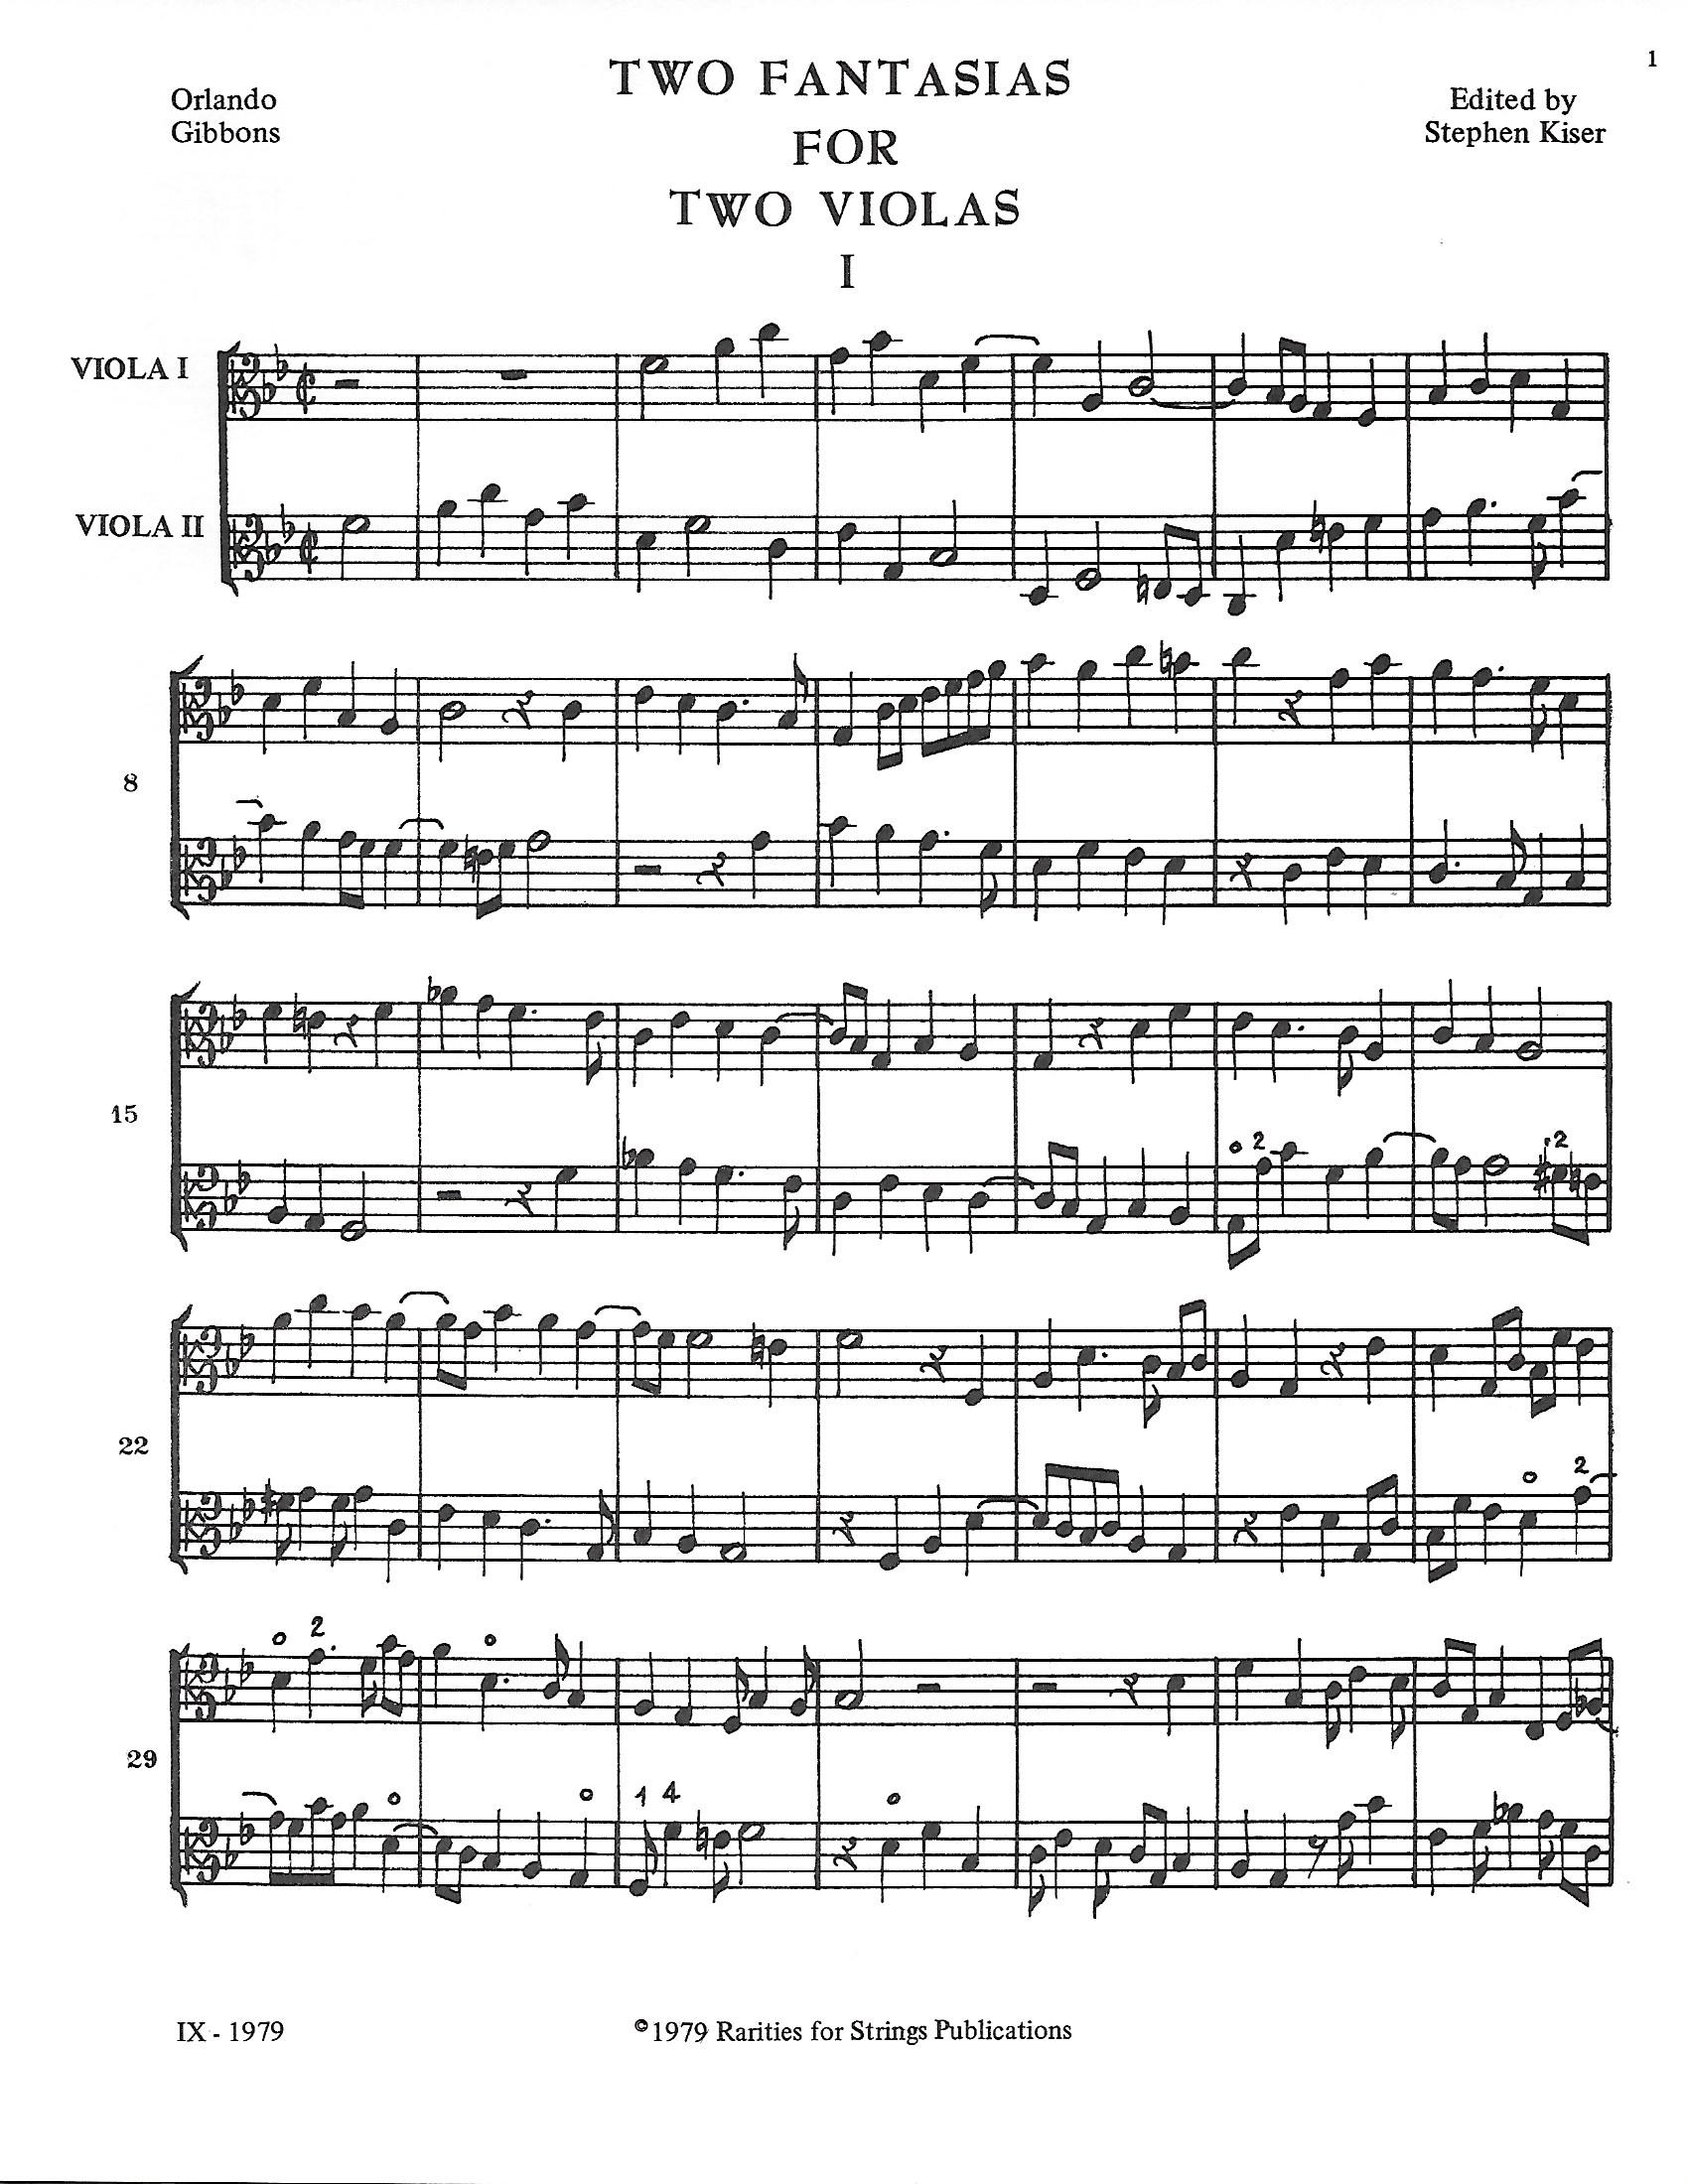 Gibbons, Orlando - Two Fantasias for Two Violas - Music